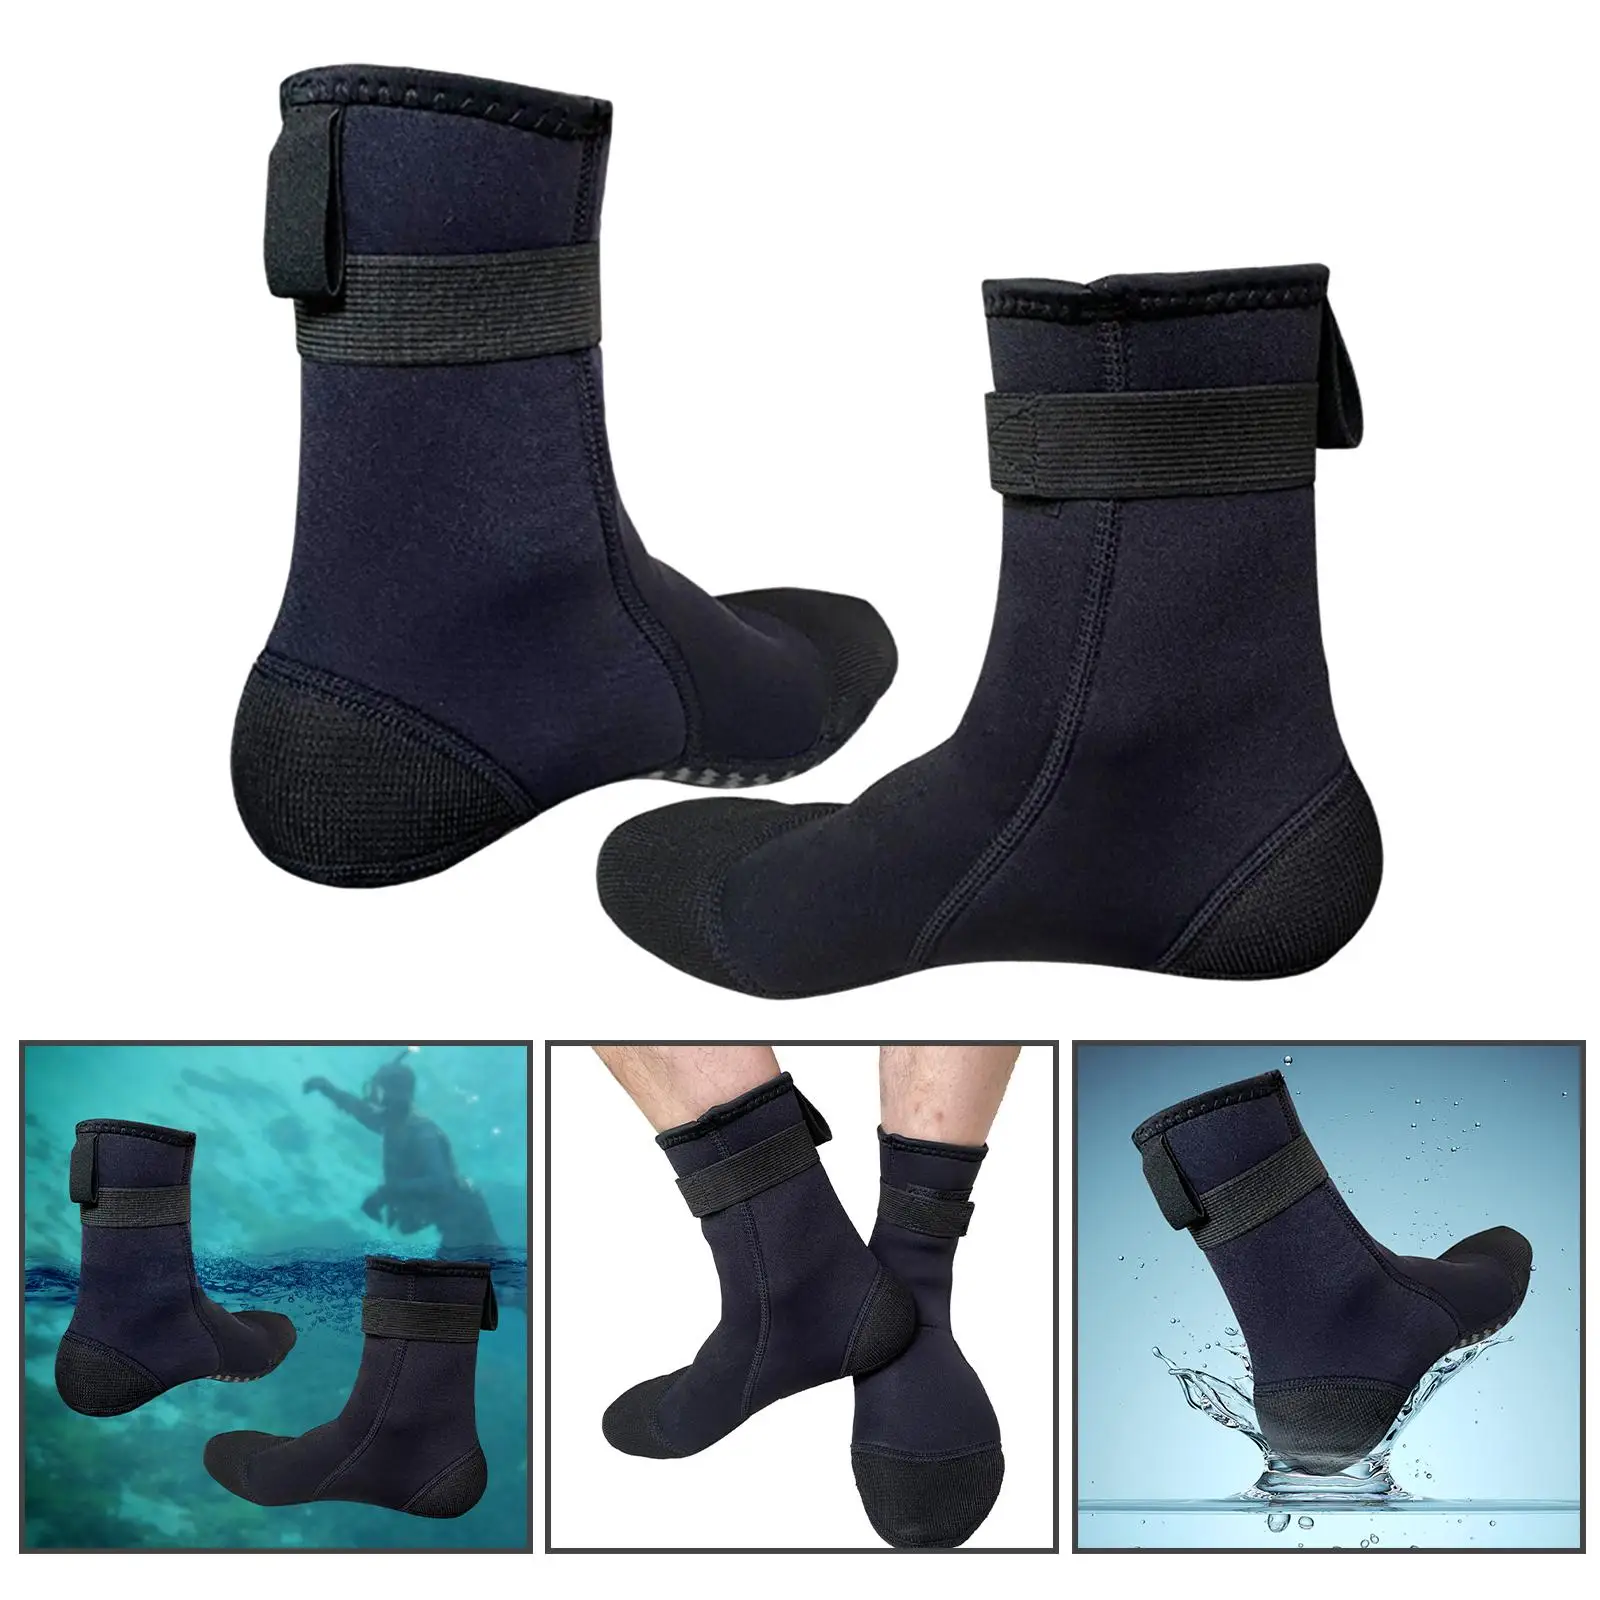 2 Pieces Neoprene Water Socks Strech Quick Drying Flexible Wetsuit Socks for Rafting